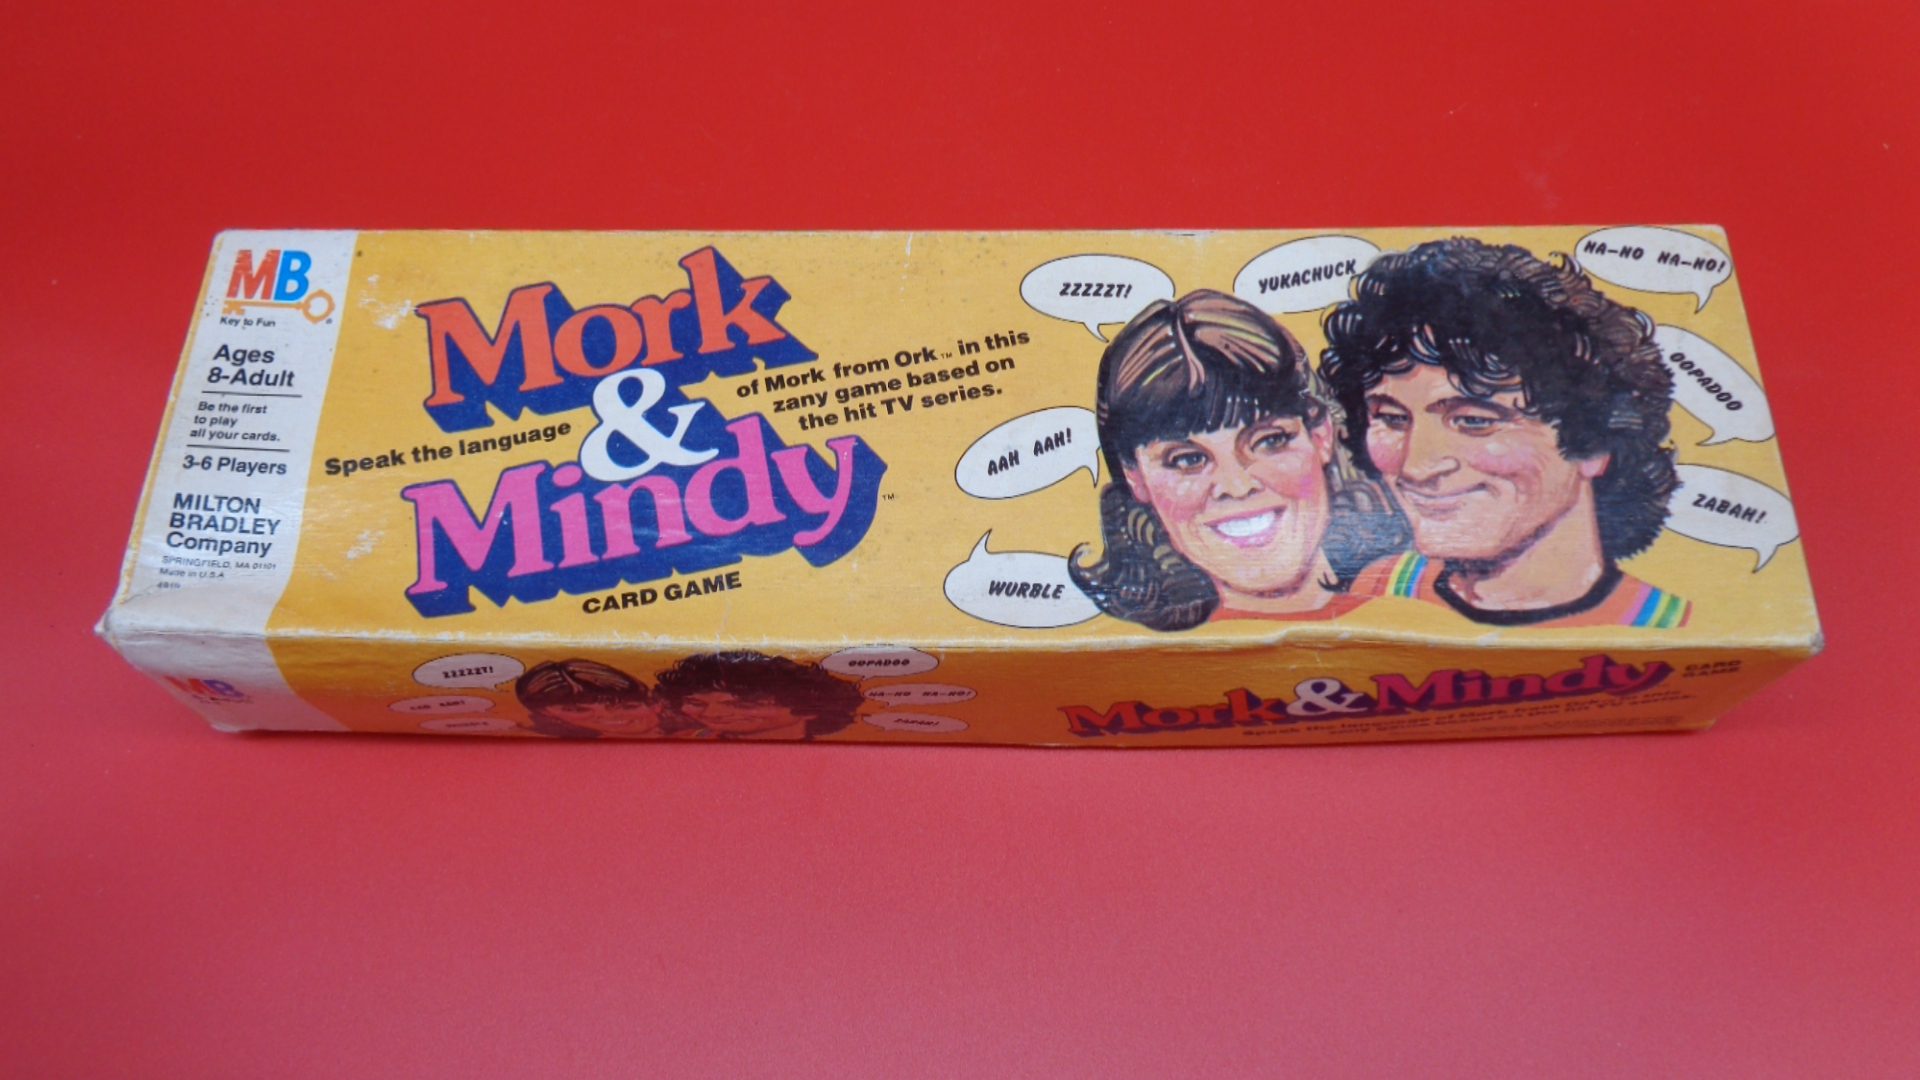 Mork & Mindy game